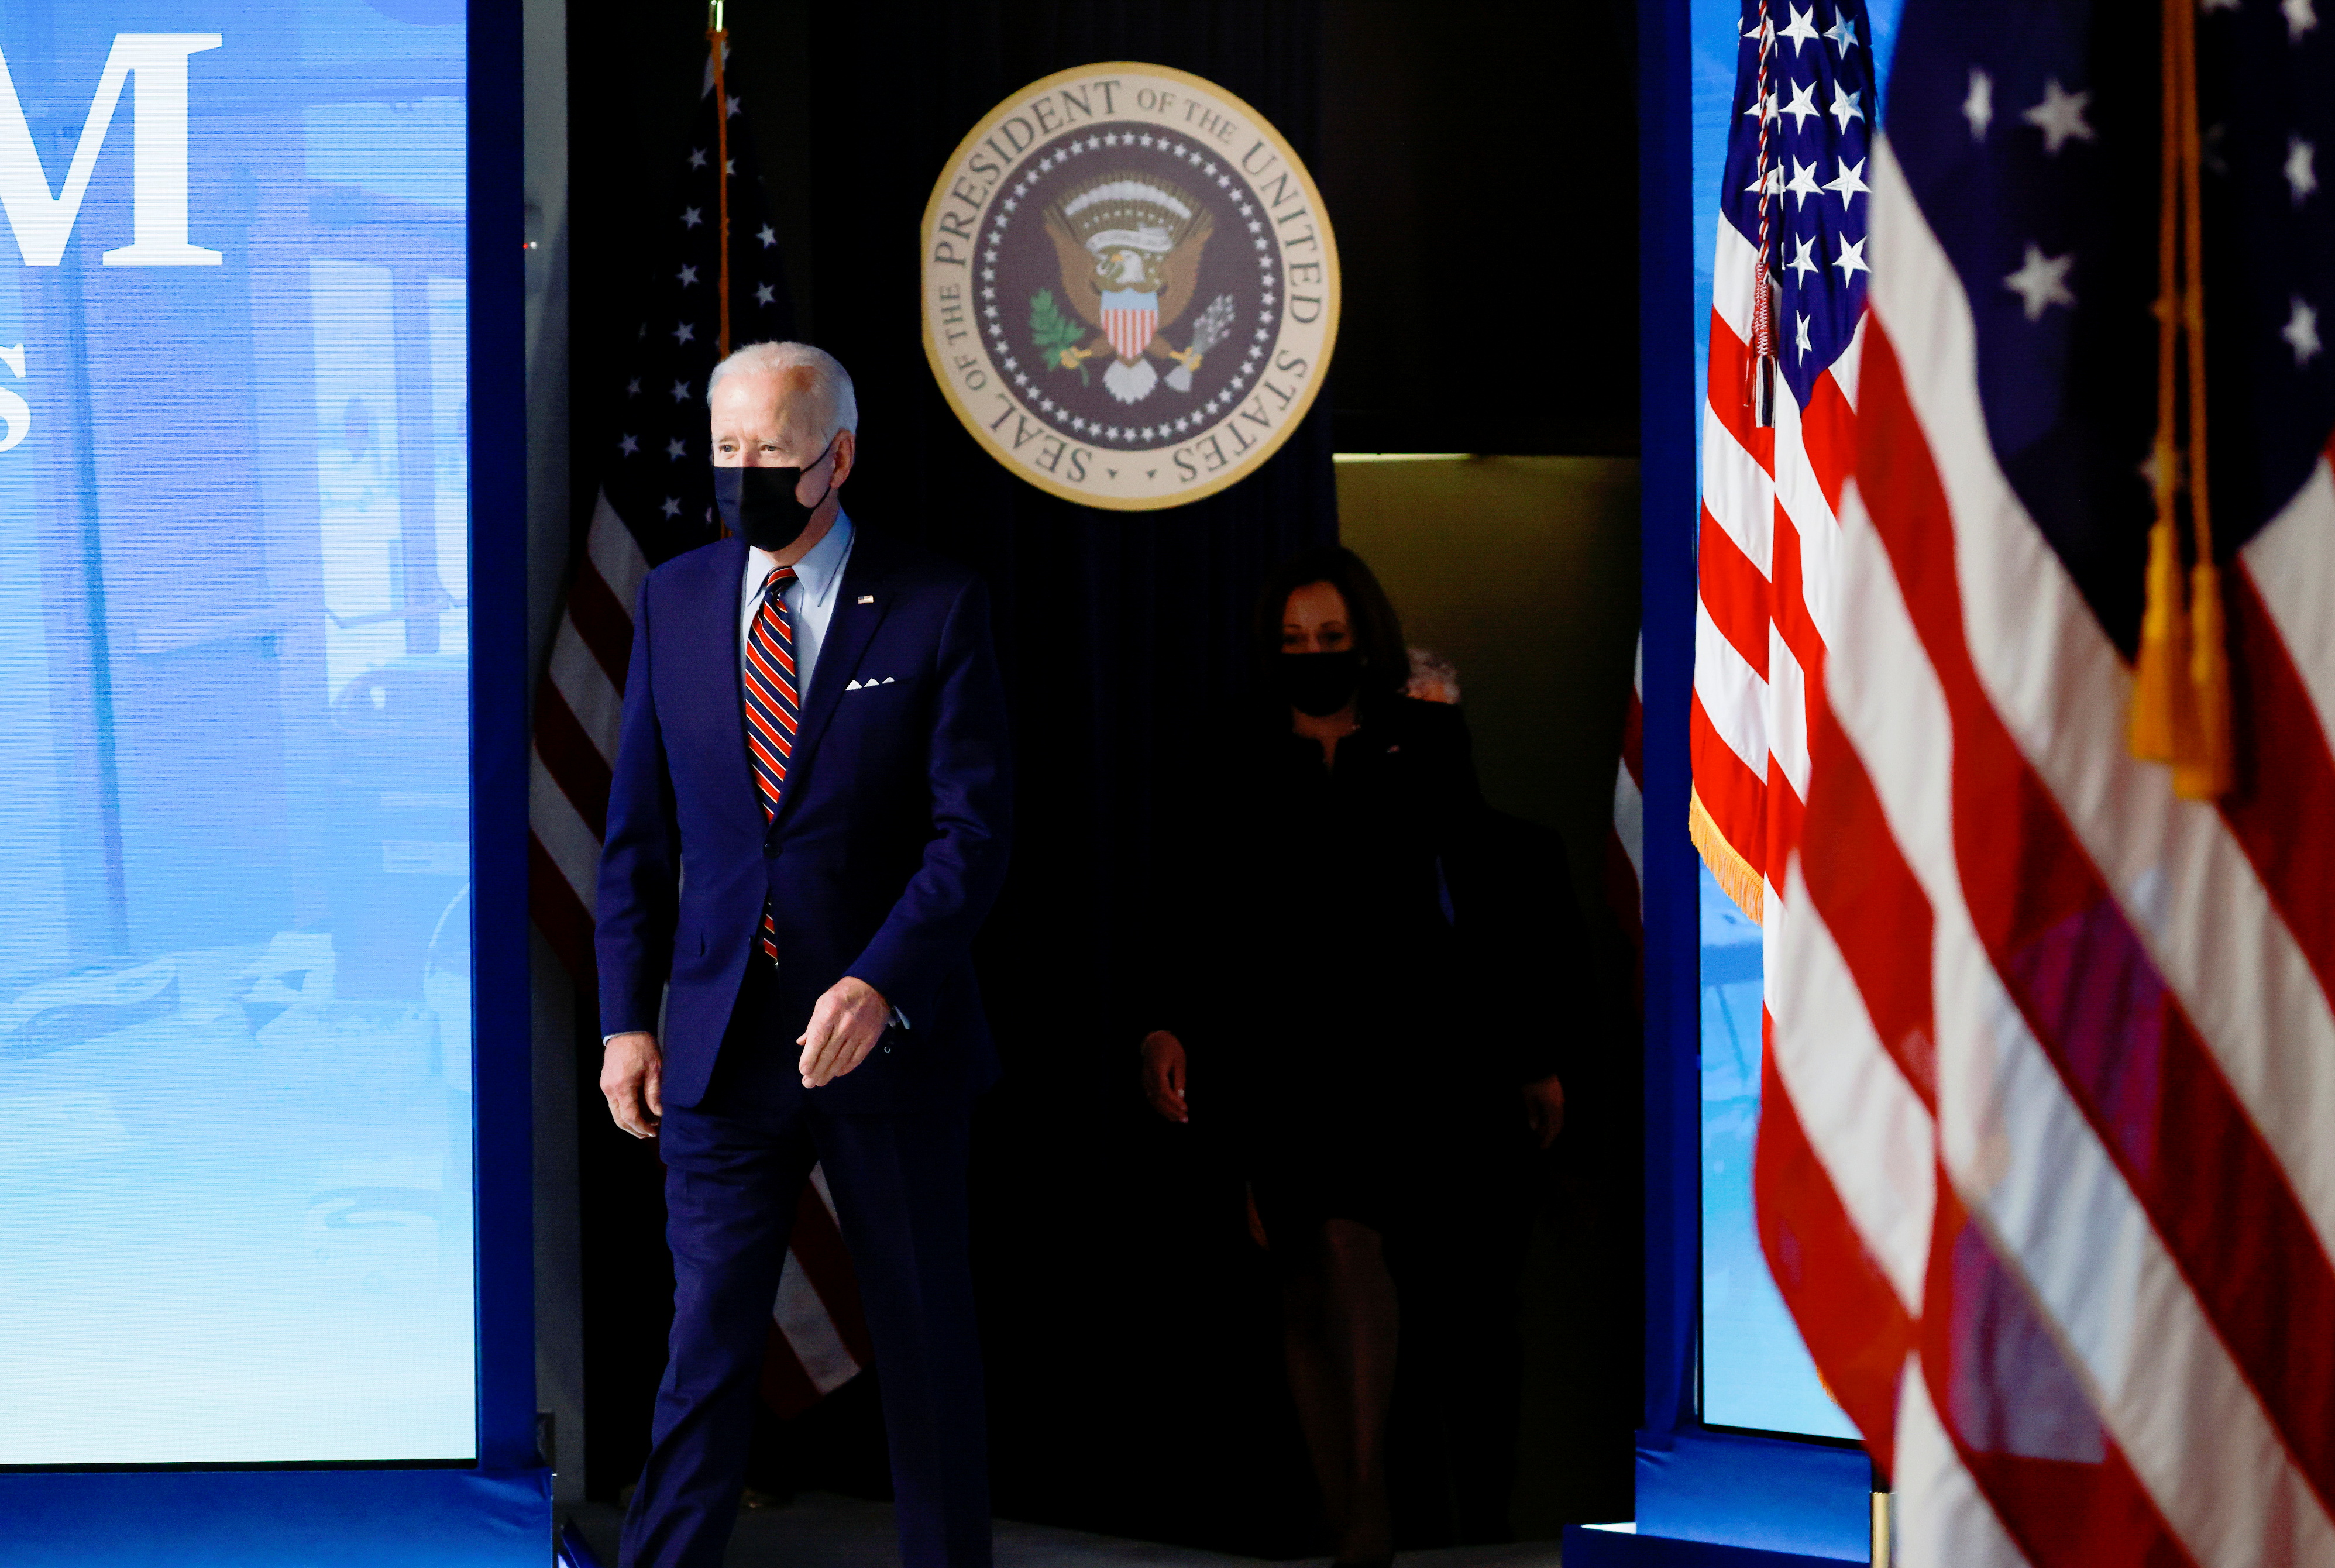 U.S. President Biden speaks about his administration's coronavirus response at the White House in Washington